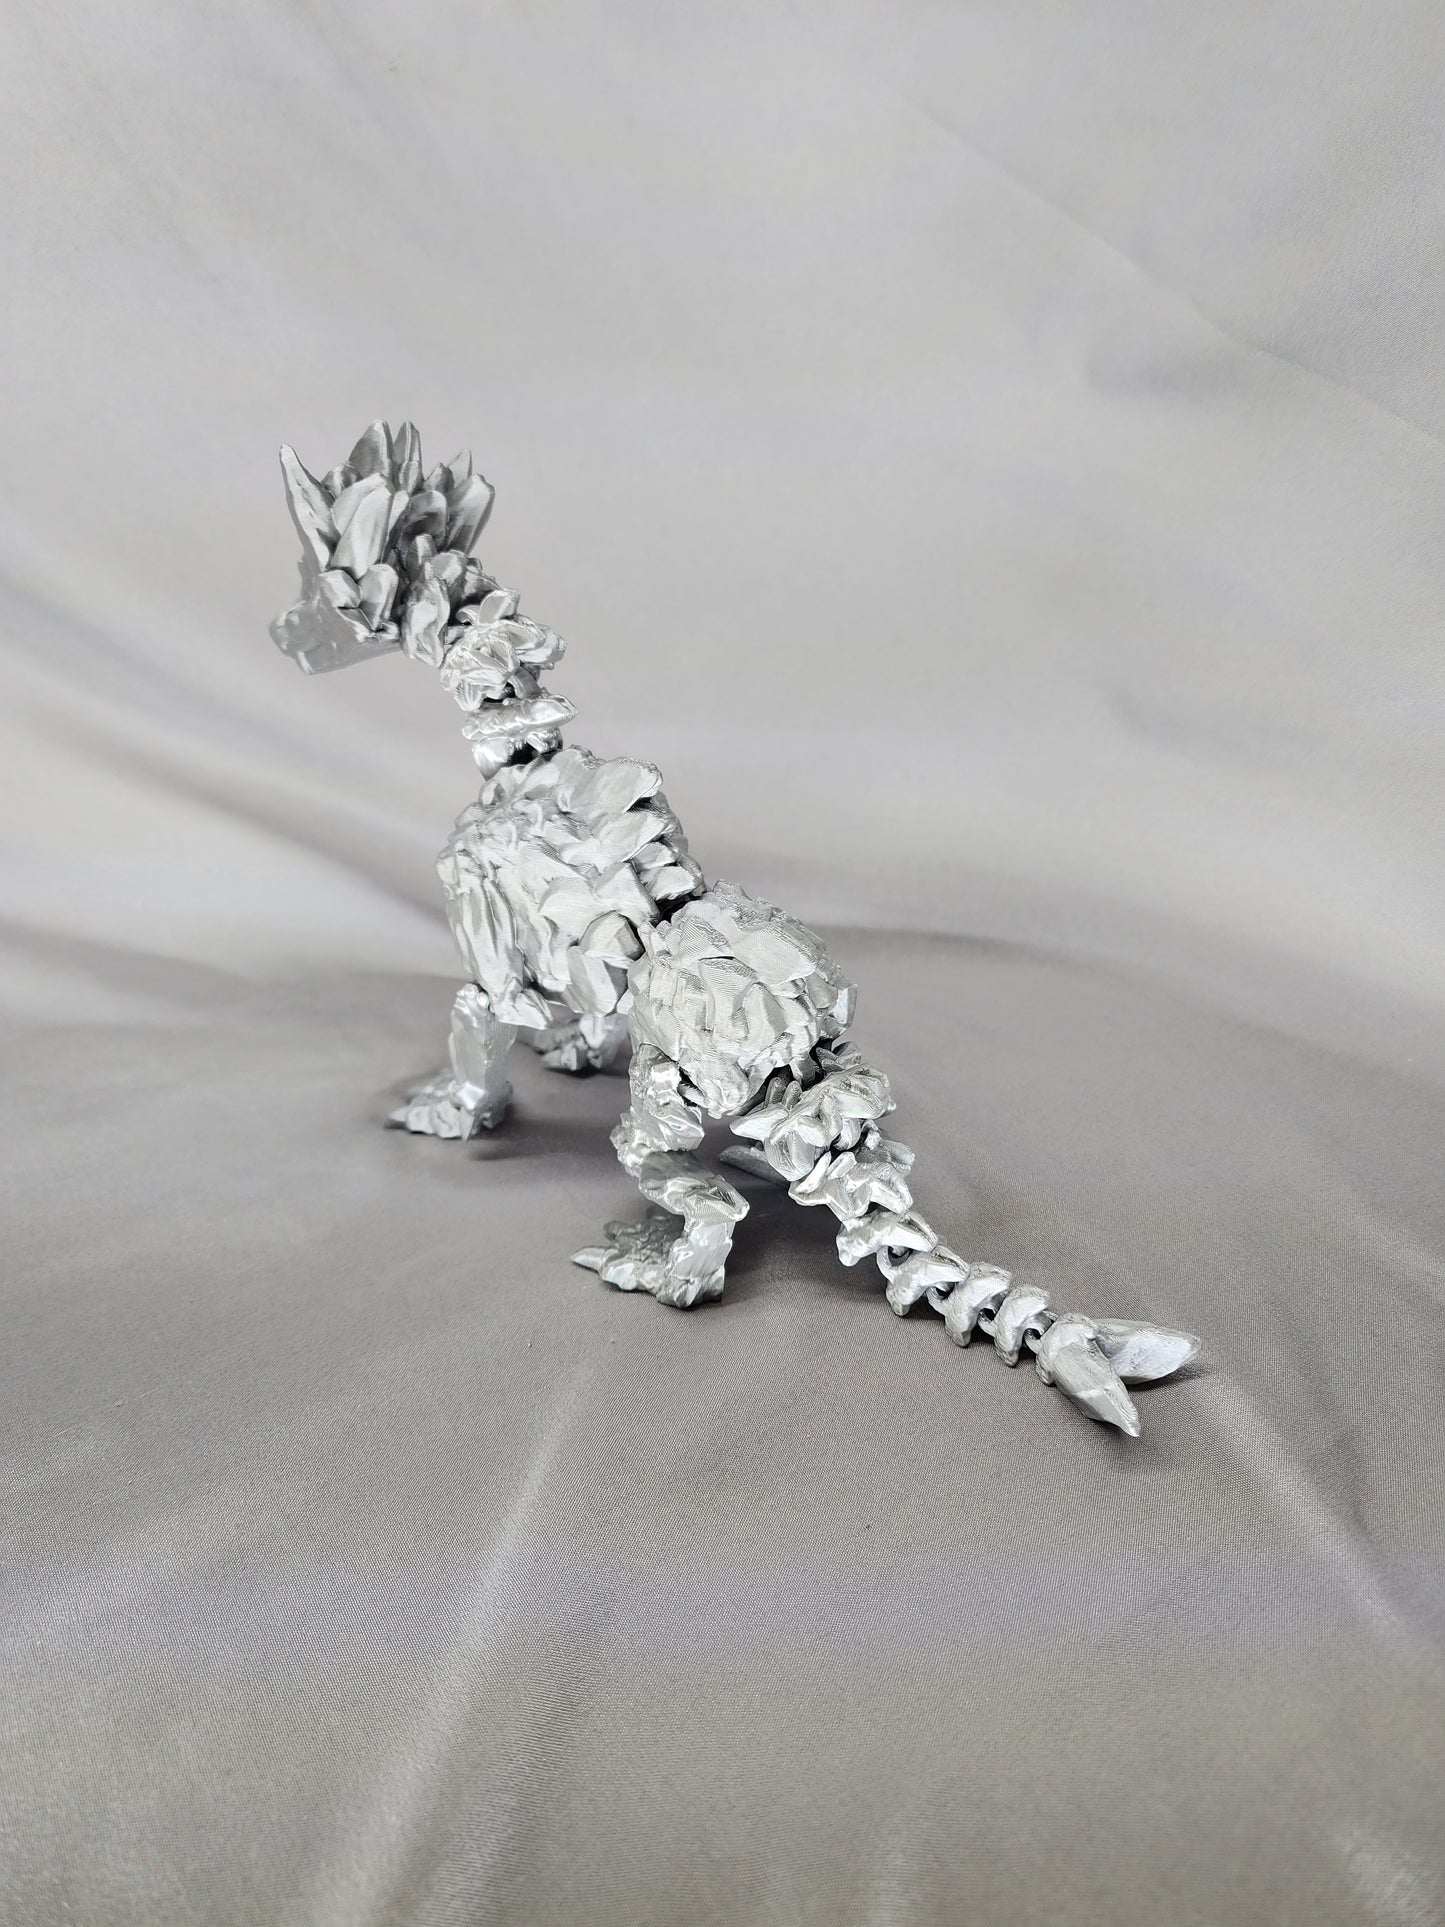 Stone Dragon articulating figurine